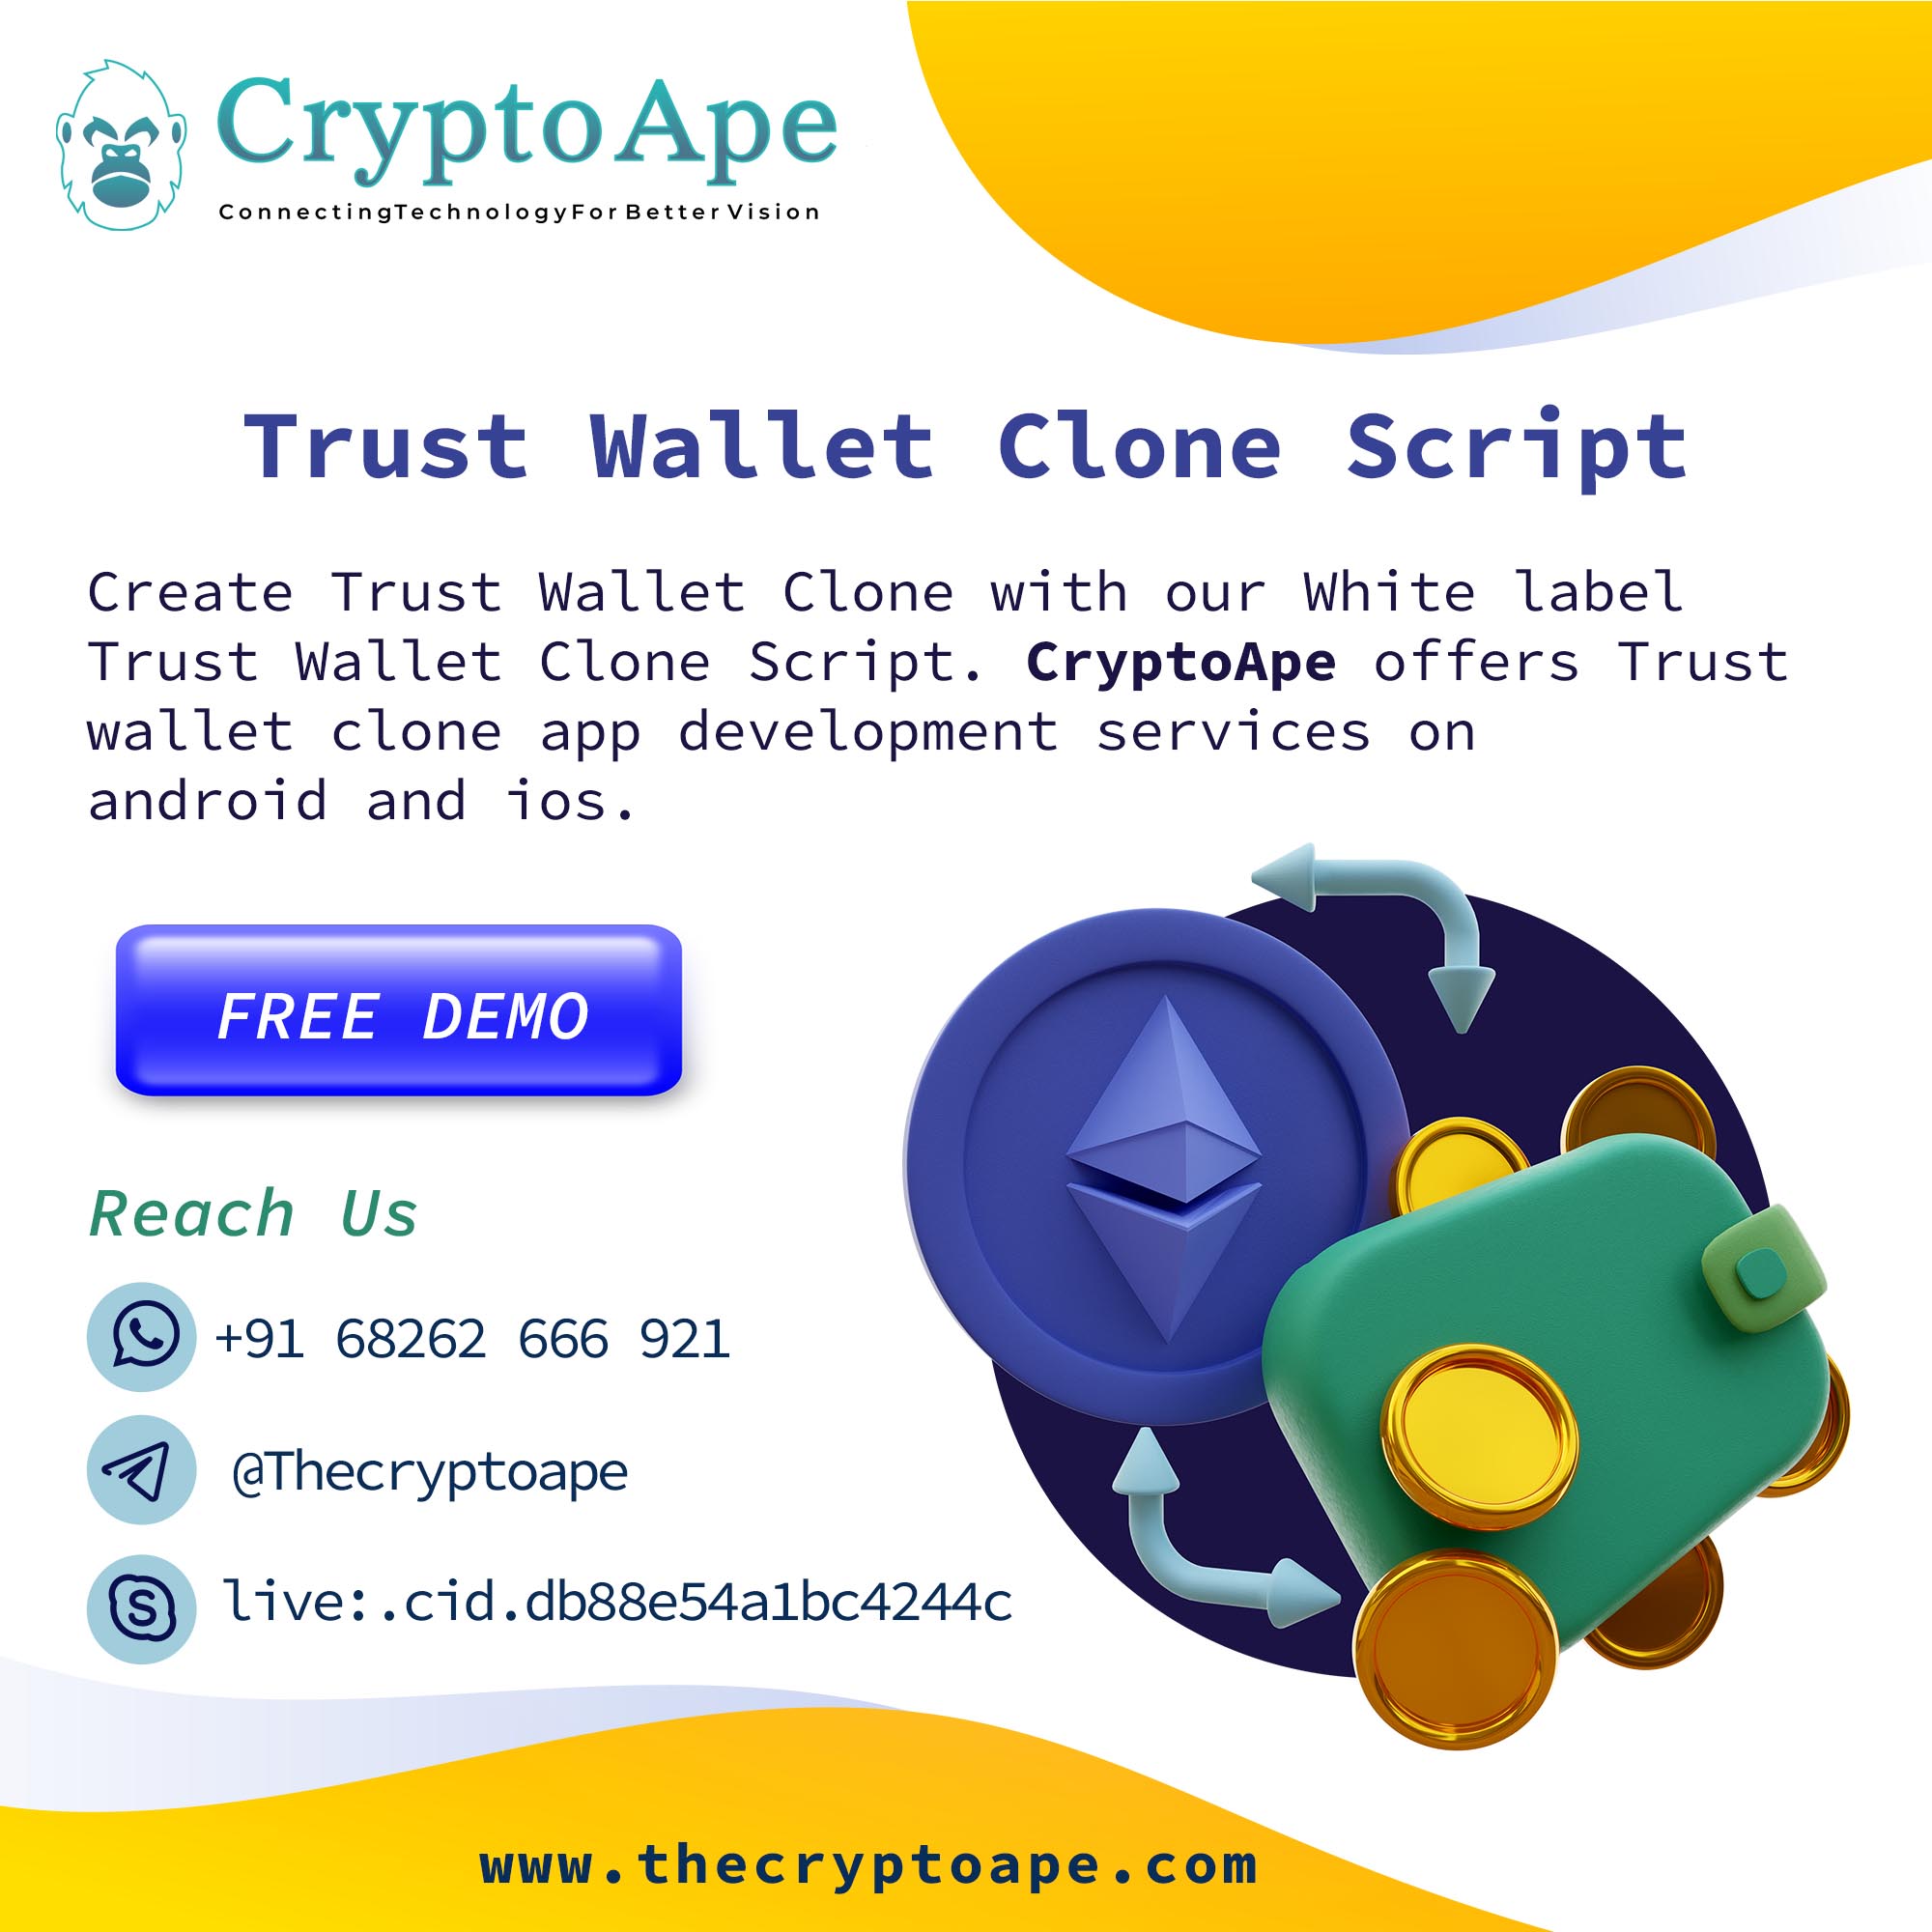 fag CryptoApe

LW) ctingTechnologyForBetter Vi

Trust Wallet Clone Script
Create Trust Wallet Clone with our White label
Trust Wallet Clone Script. CryptoApe offers Trust

wallet clone app development services on
android and ios.

Ee
FREE DEMO

Reach Us
(O +91 68262 666 921

<4] @Thecryptoape

   

© live: .cid.db88e54albc4244c

www.thecryptoape.com